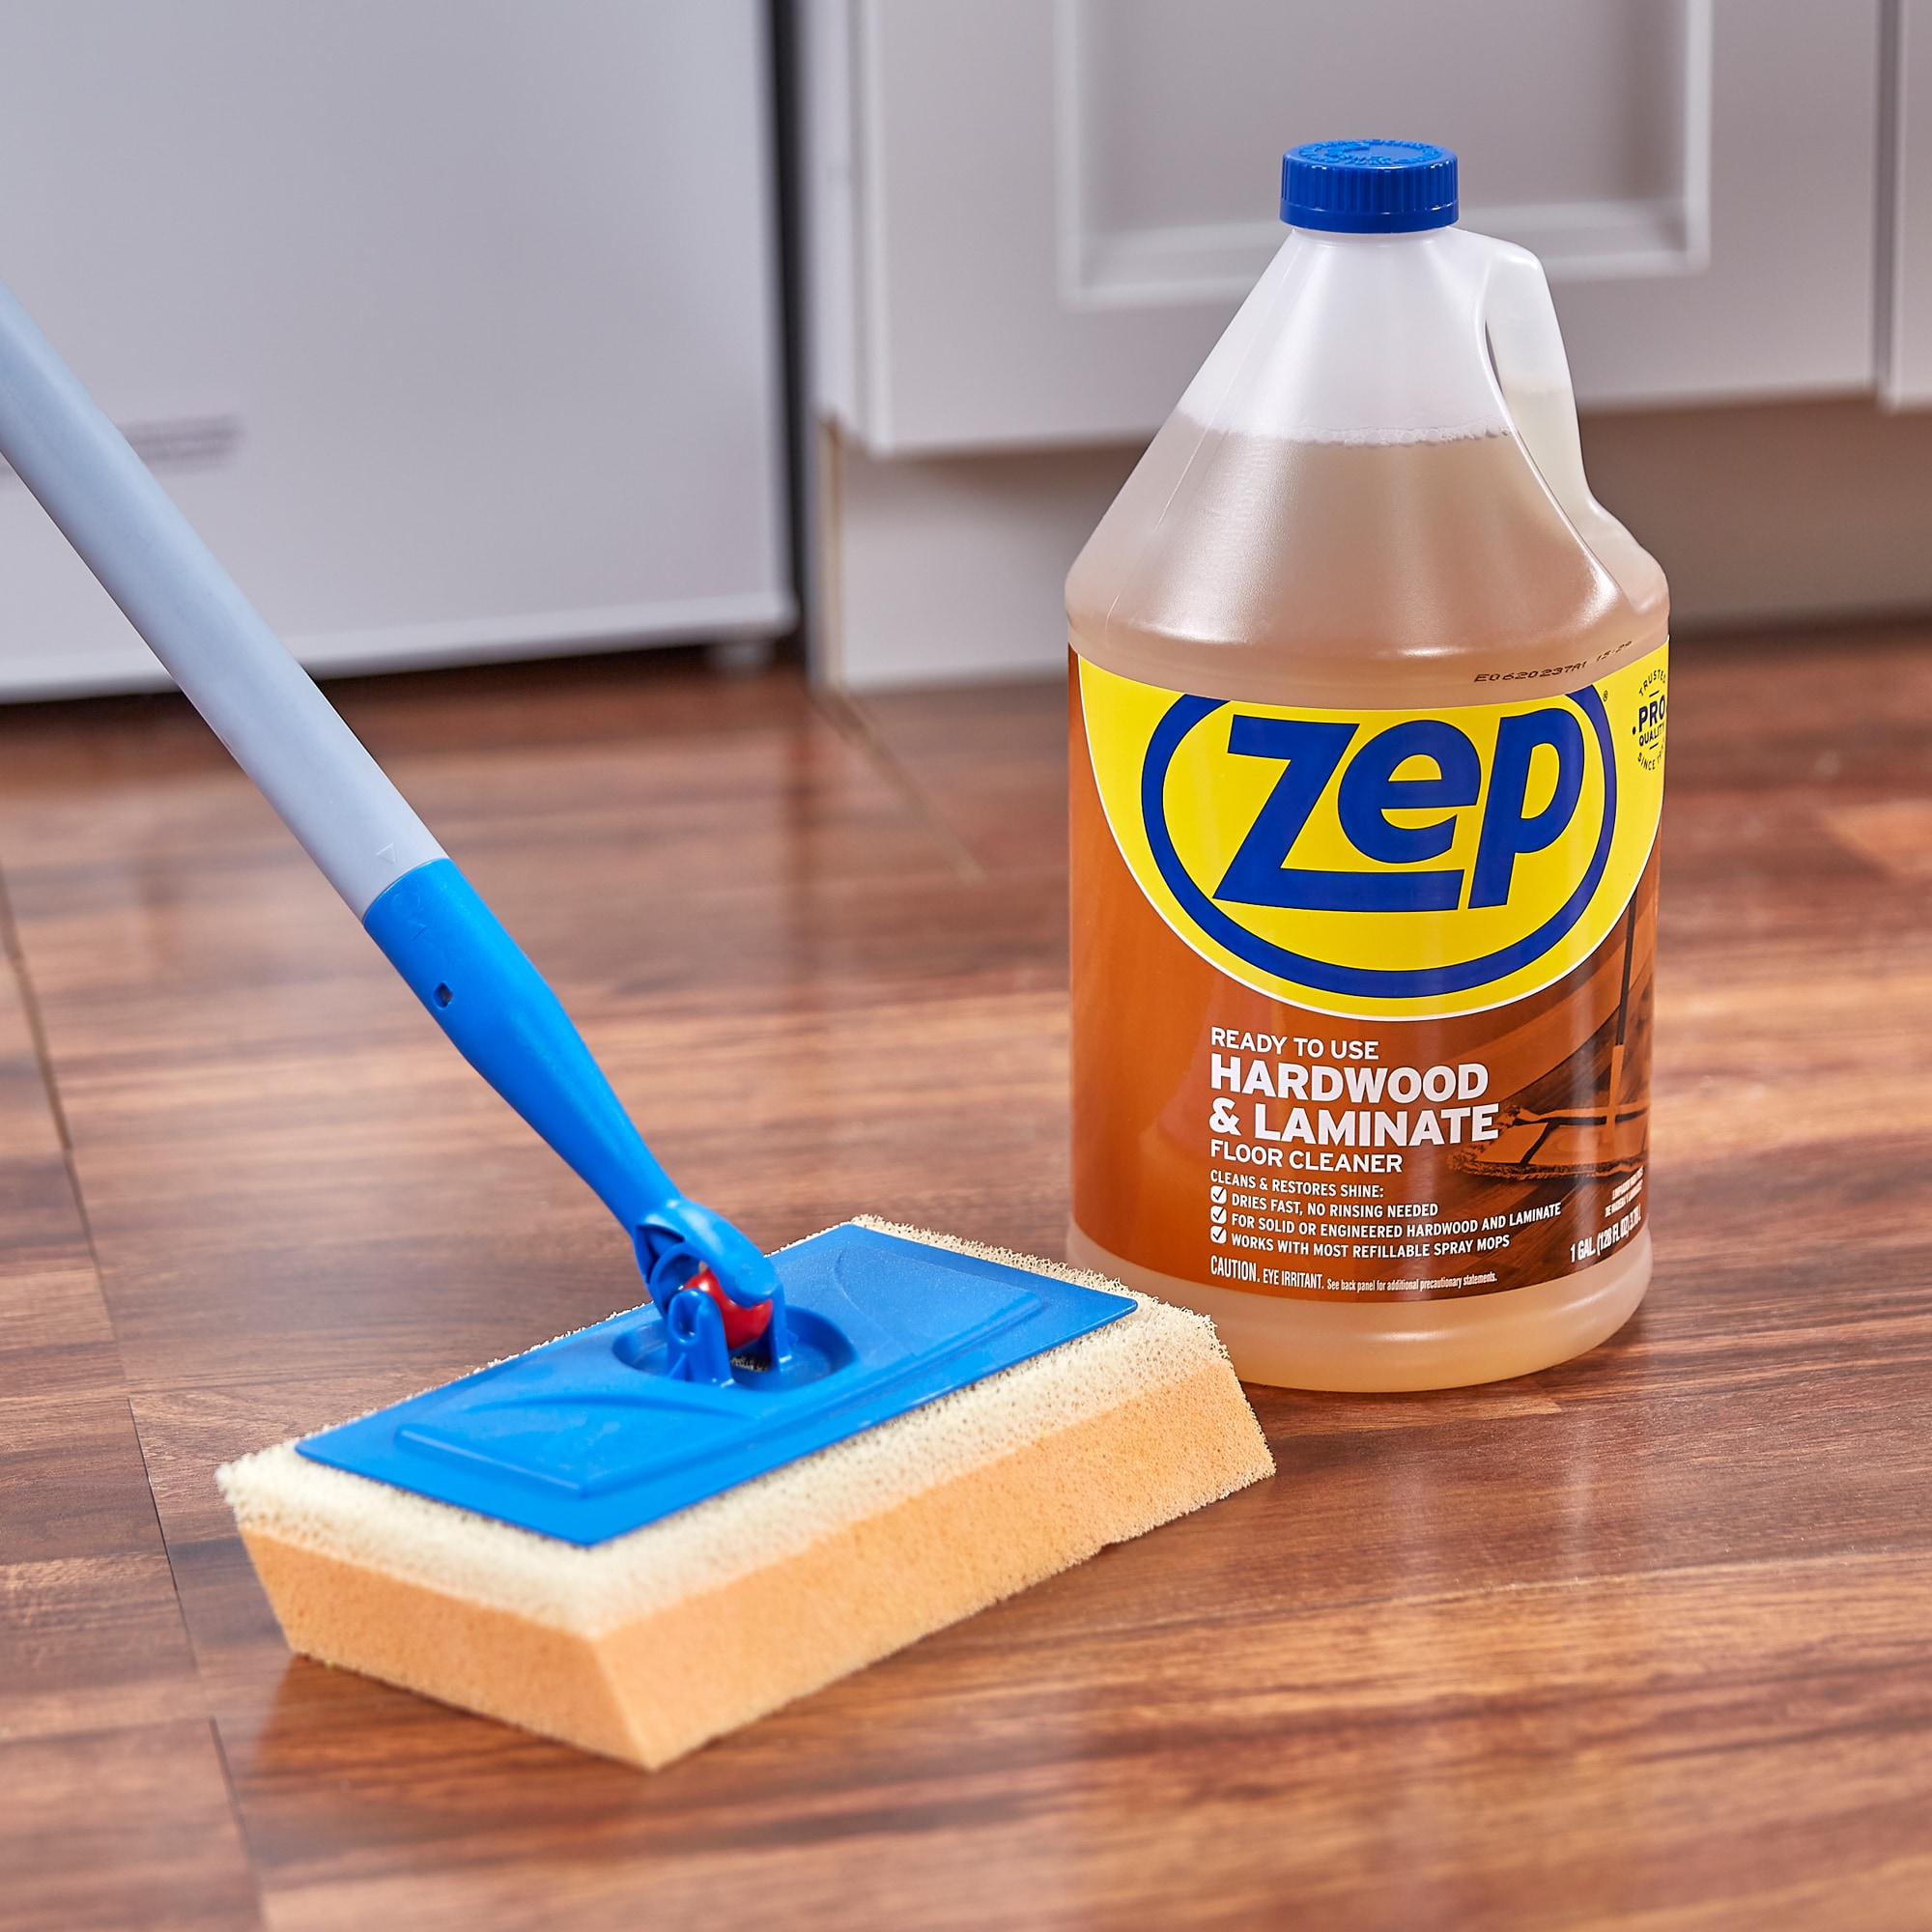 Bona Floor Cleaner, Hardwood, Cedar Wood, Fresh Scent, Ready-to-Use Refill - 128 fl oz. (3.78 l)